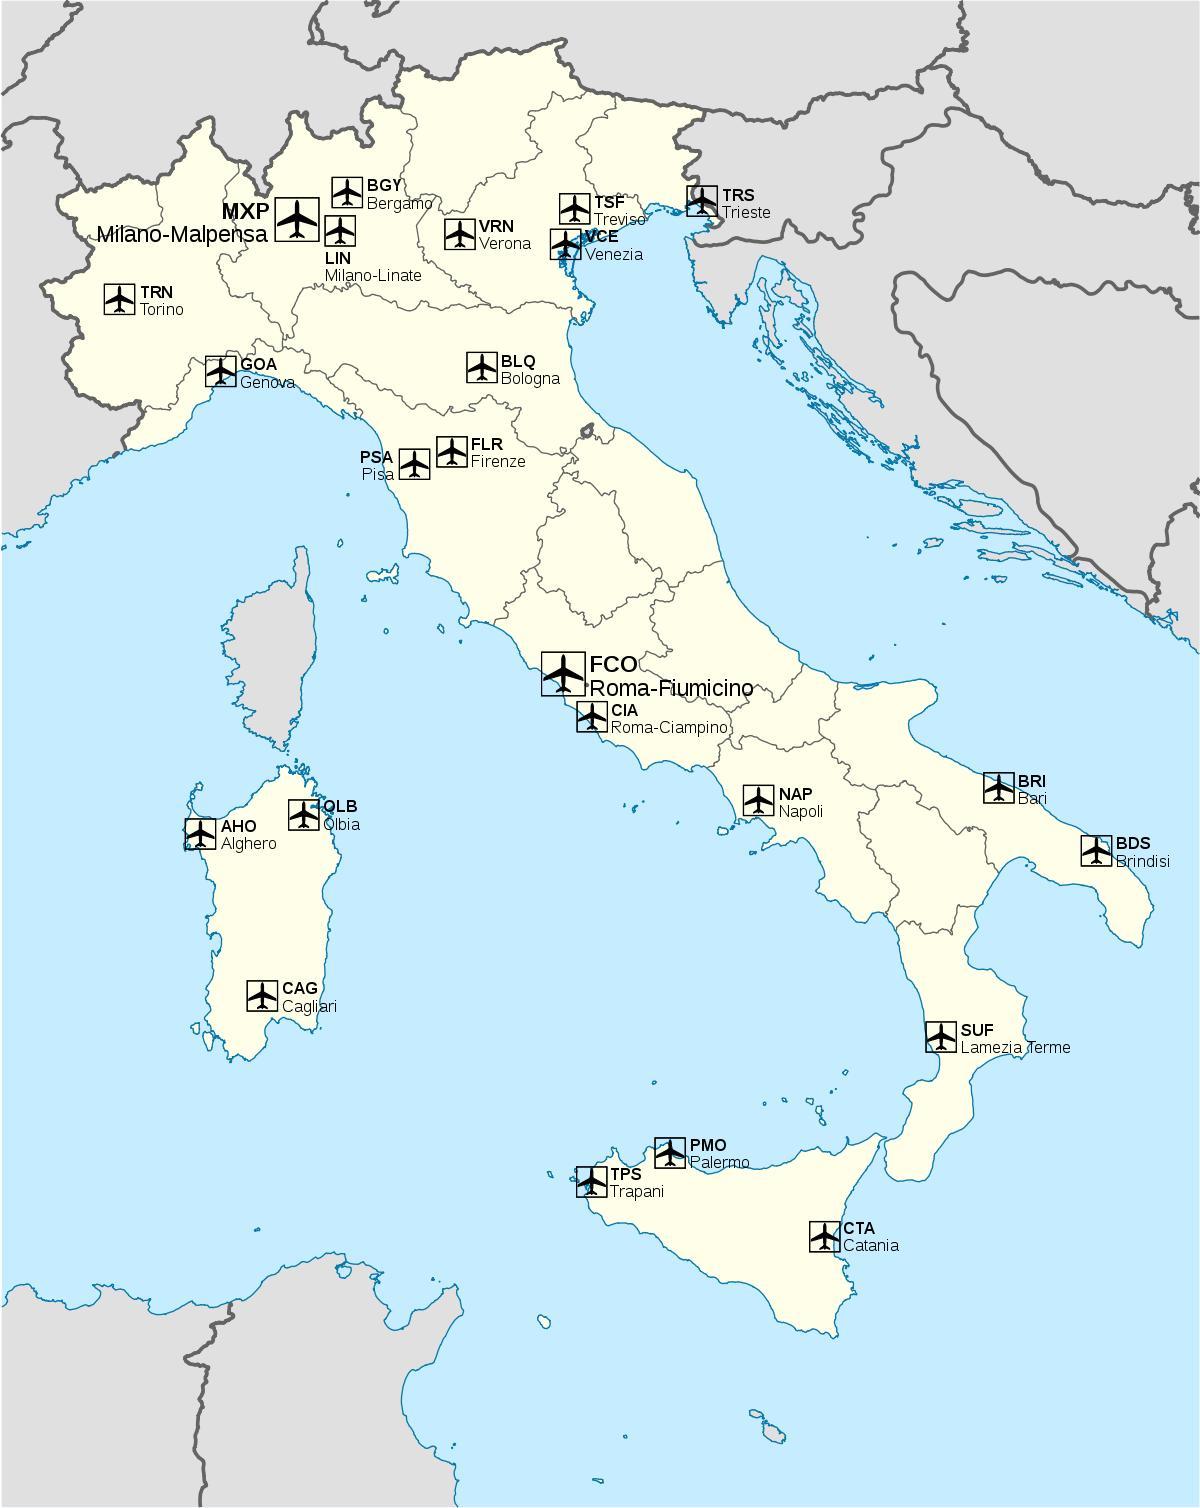 parma italija karta Italija kartu zračne luke   Međunarodne zračne luke u Italiji na  parma italija karta